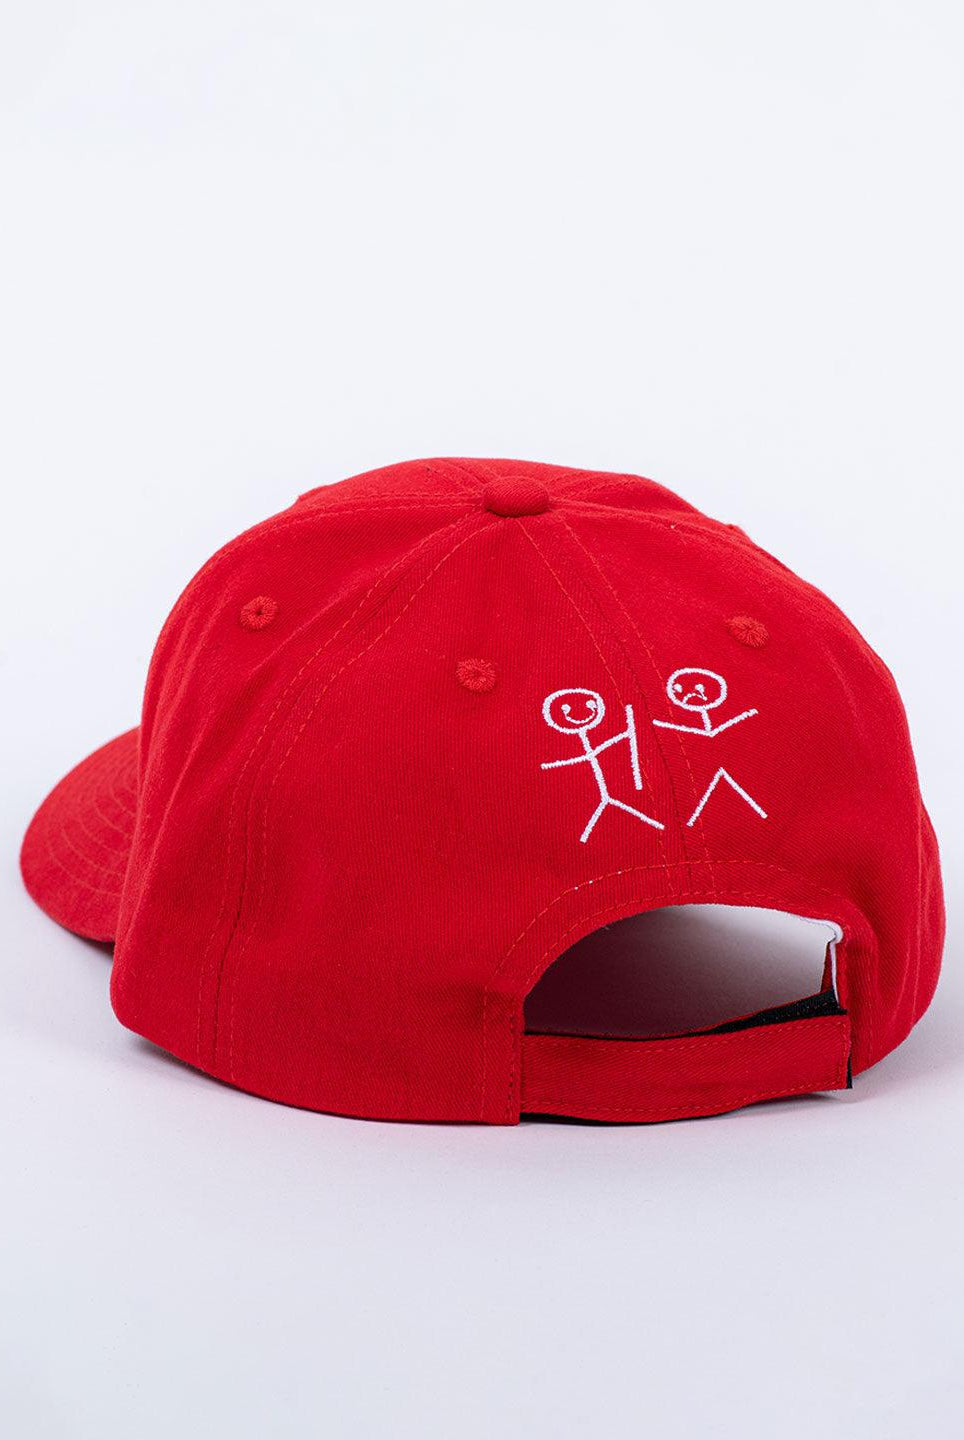 I'Ve Got Your Back Red Free Size Unisex Baseball Caps - Tistabene